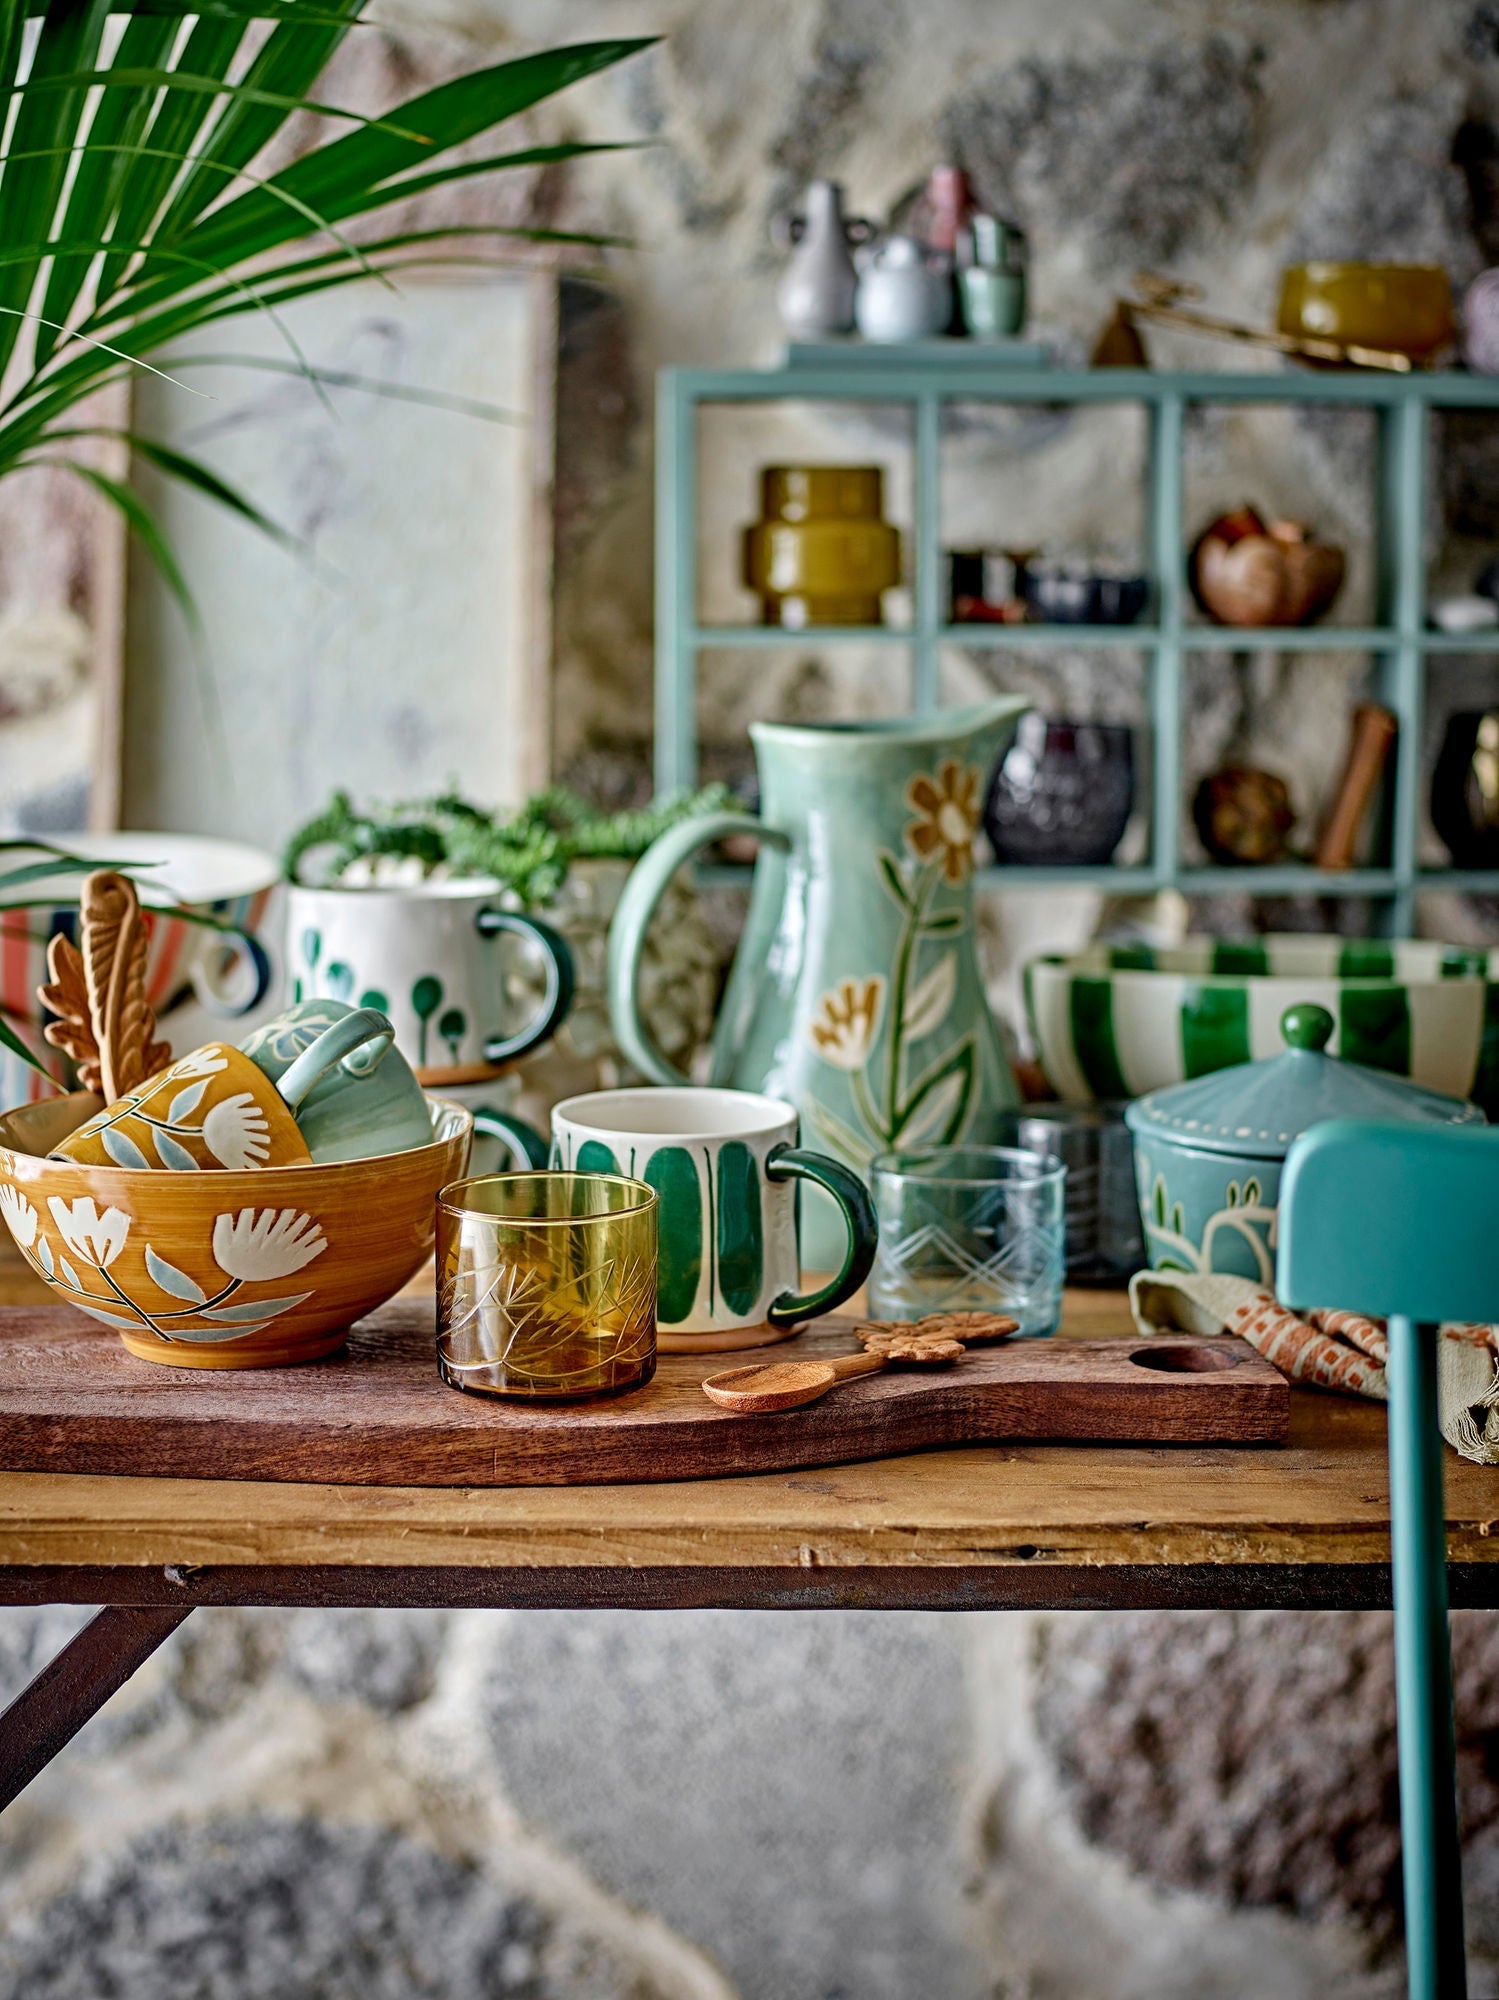 Creative Collection Tangier Bowl, Orange, Stoneware